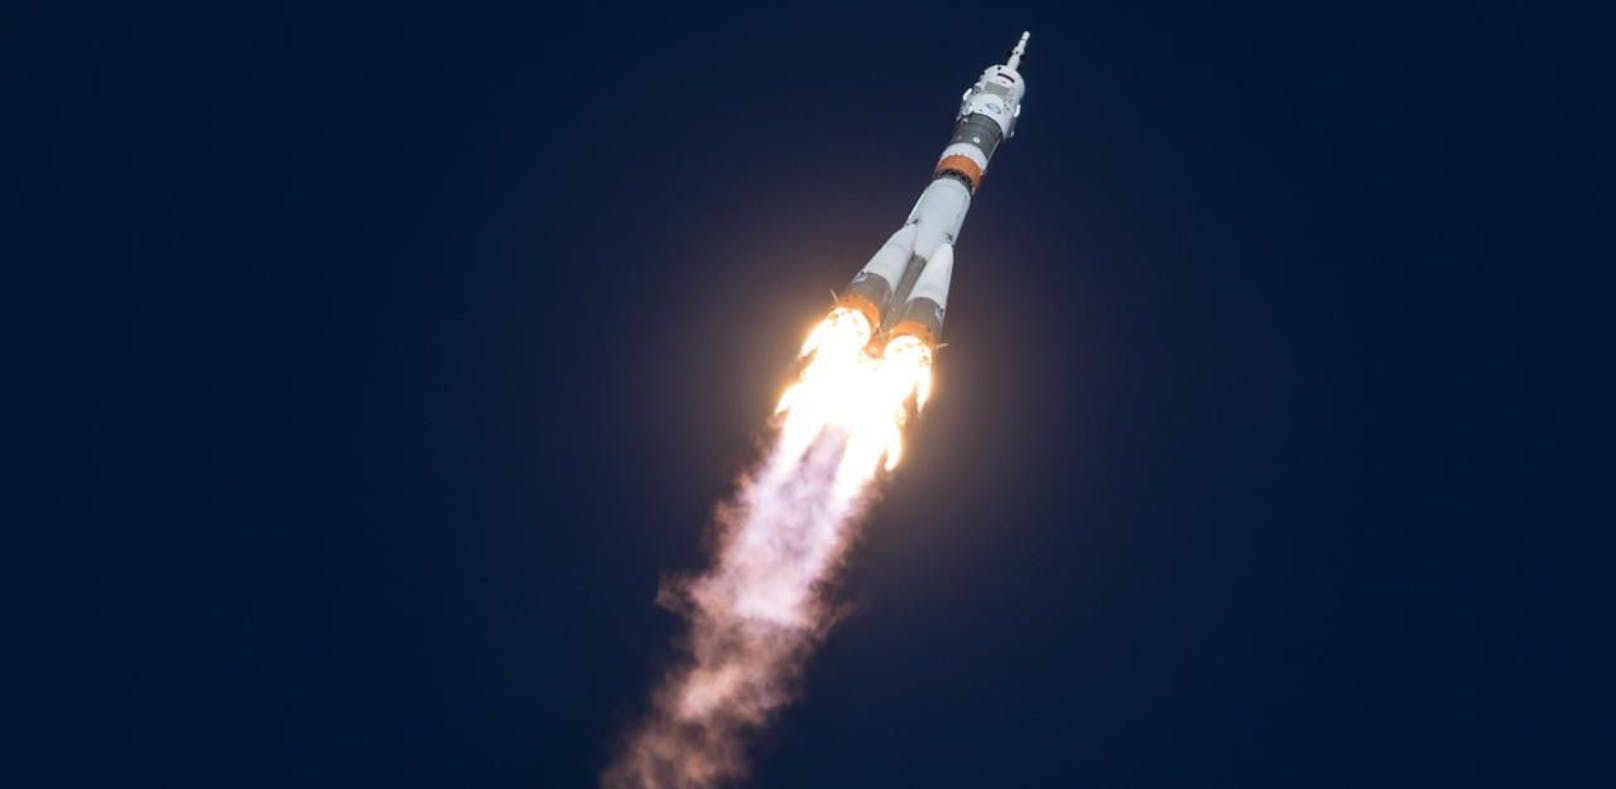 Astronauten müssen nach Raketen-Panne notlanden